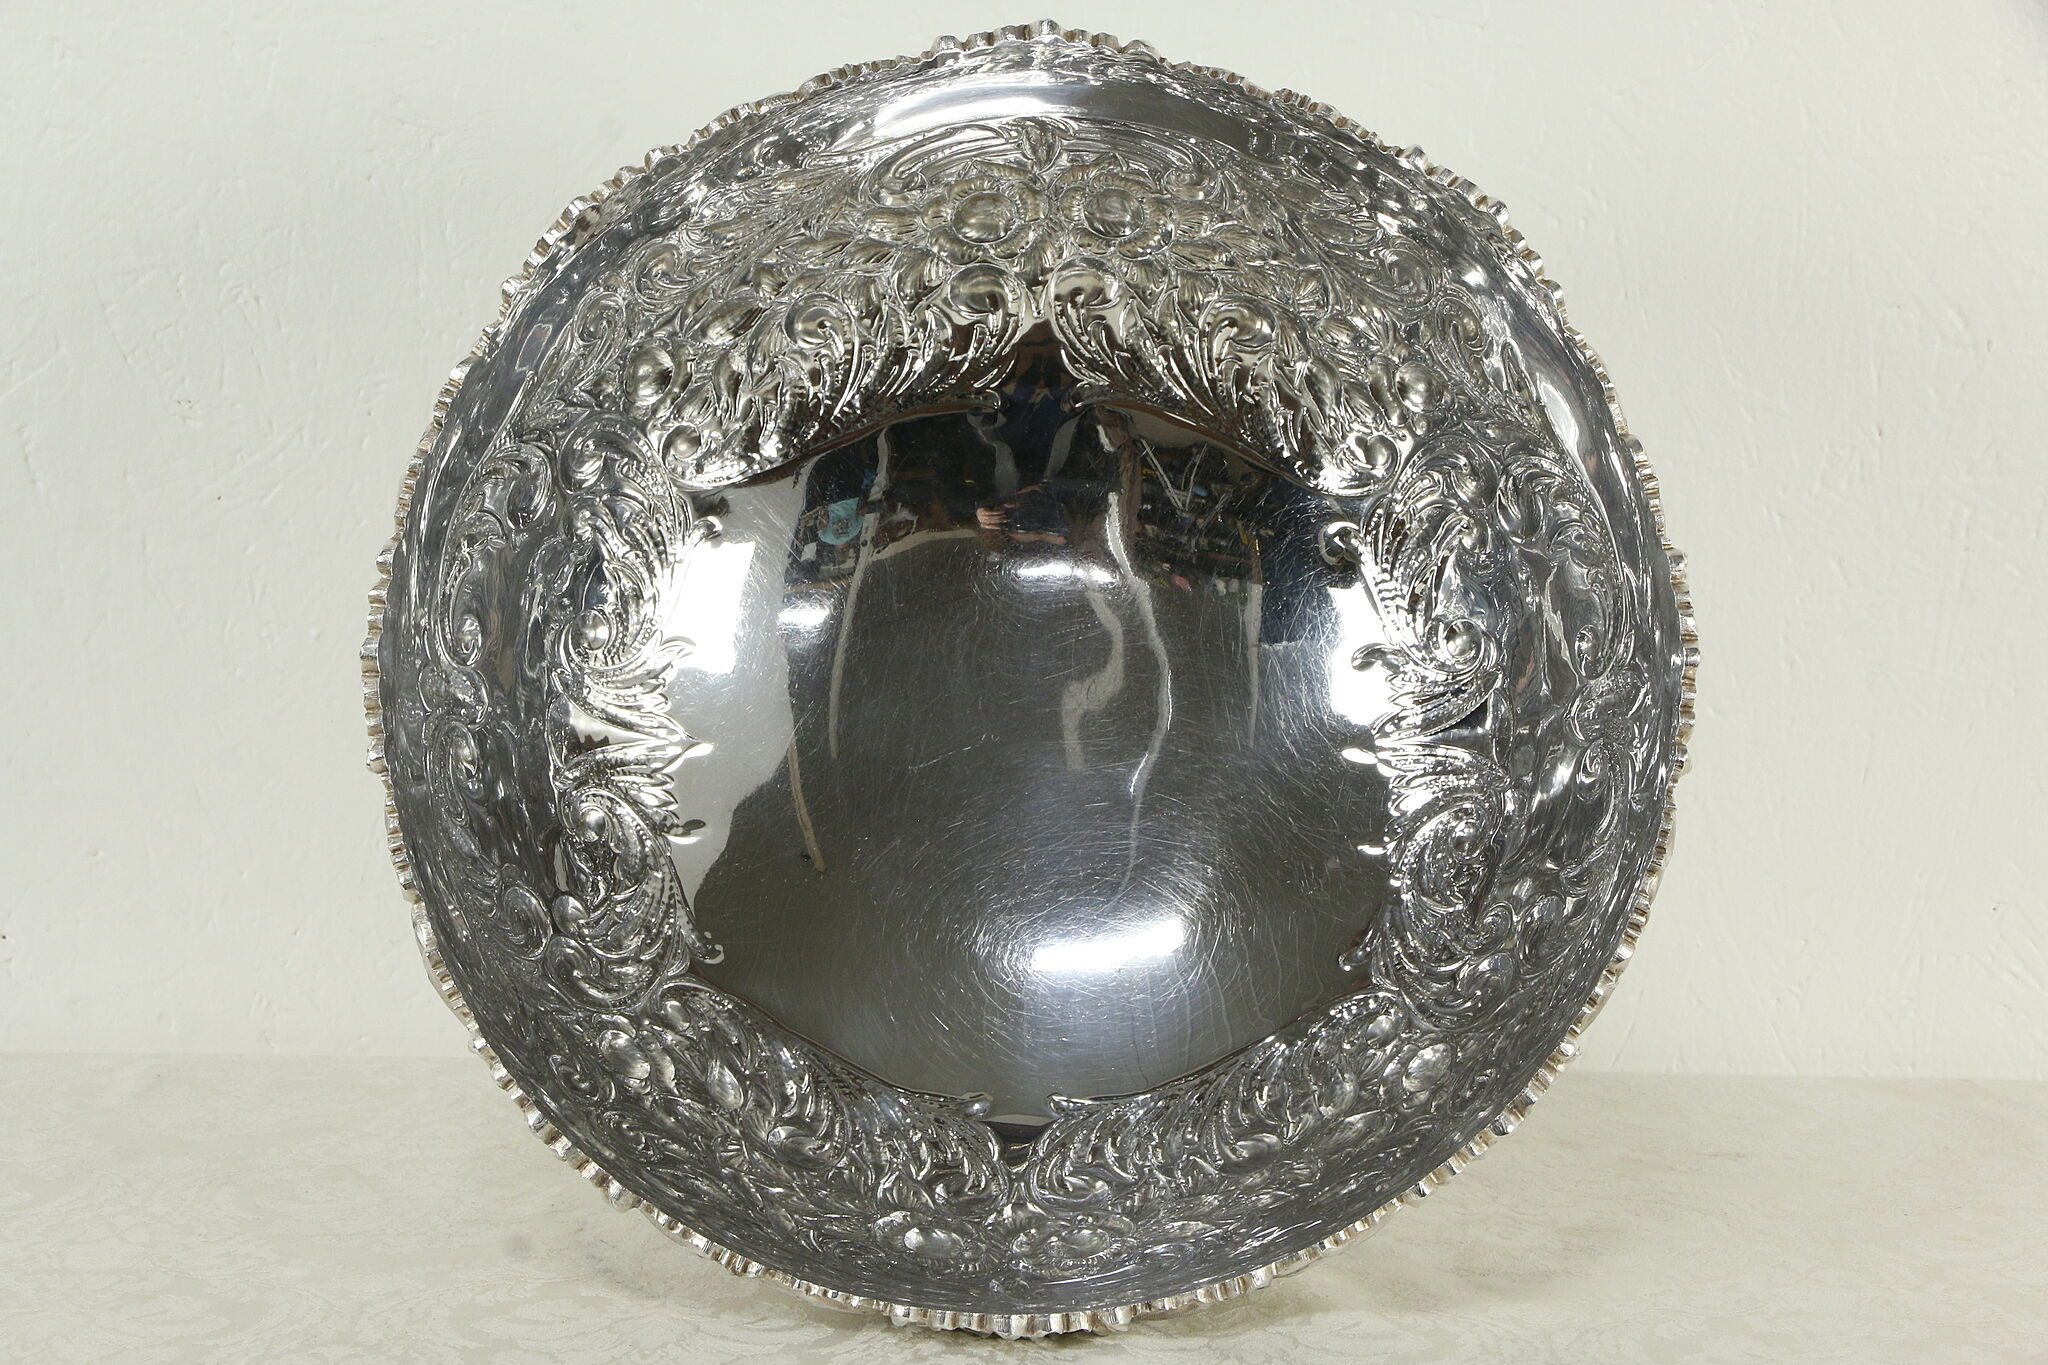 Gorgeous International Silver Vintage Silverplate Punch Bowl Ladle… –  Second Wind Vintage